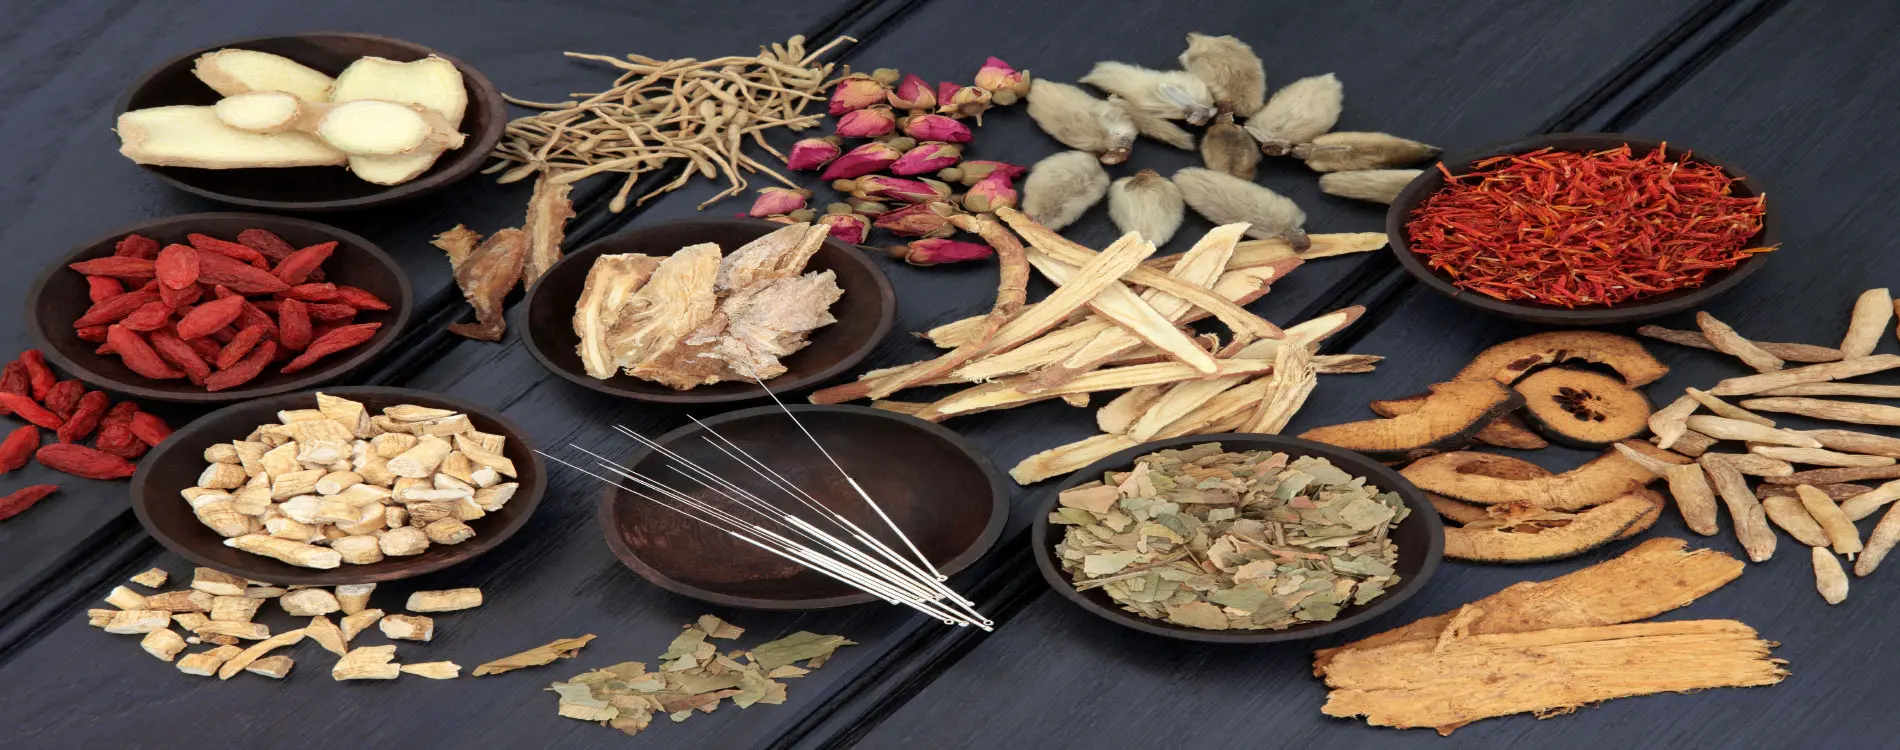 la-senda-natural-medicina-china